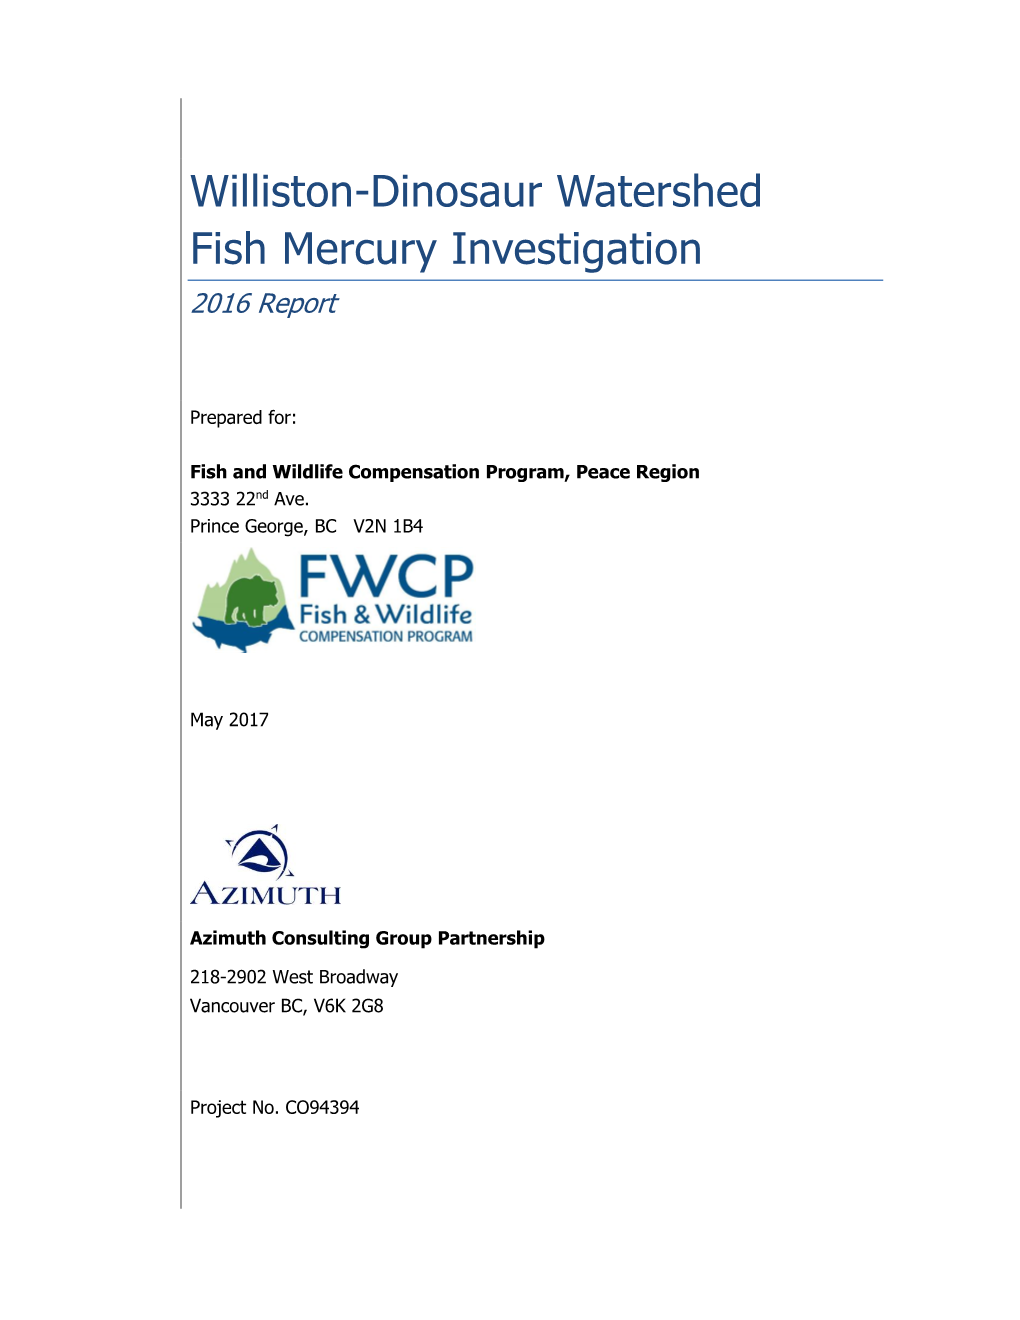 Williston-Dinosaur Watershed Fish Mercury Investigation 2016 Report